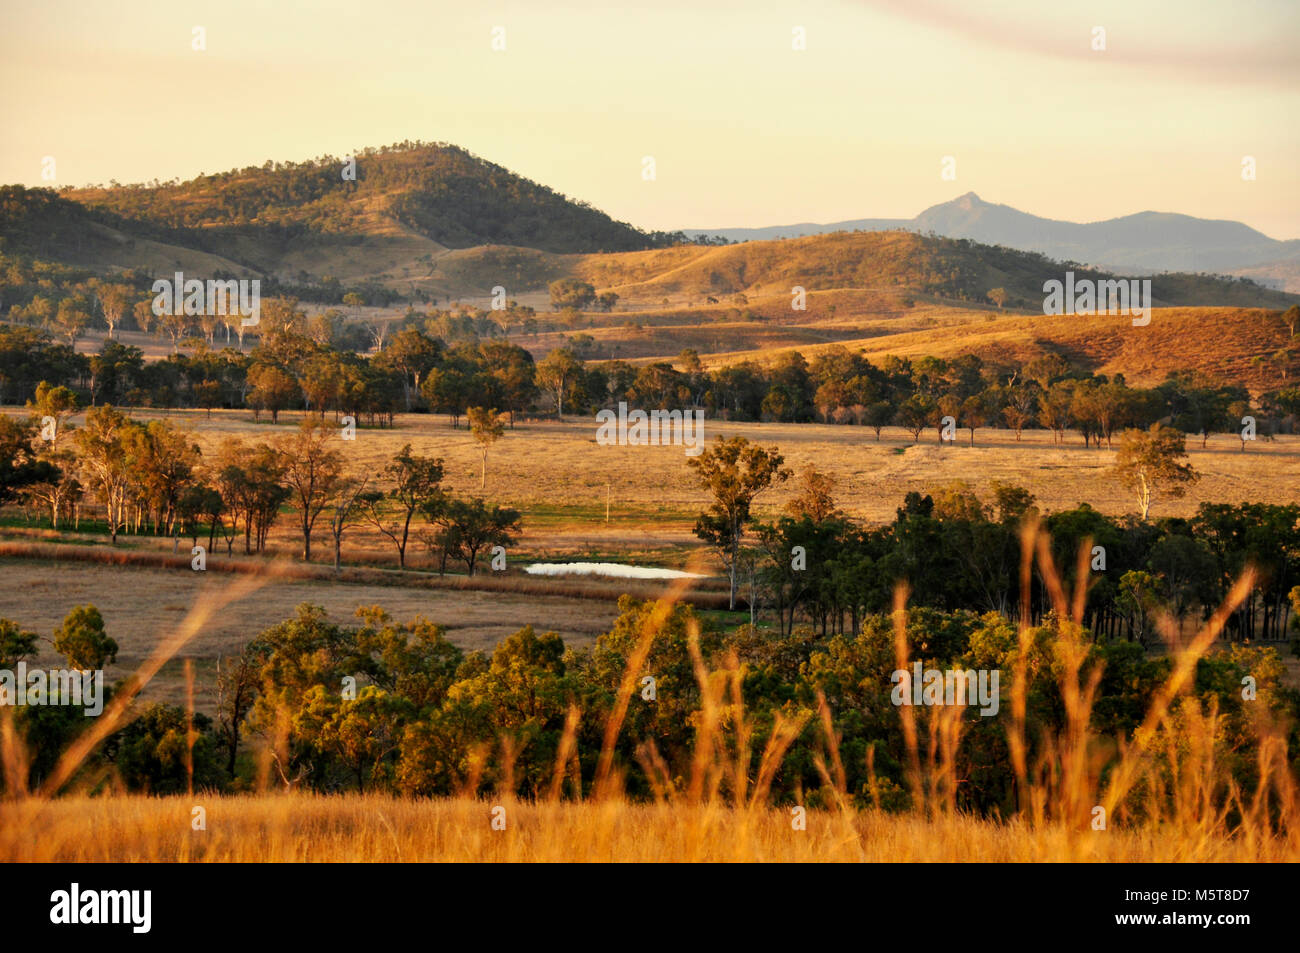 AUSTRALIAN OUTBACK LANDSCAPES Stock Photo